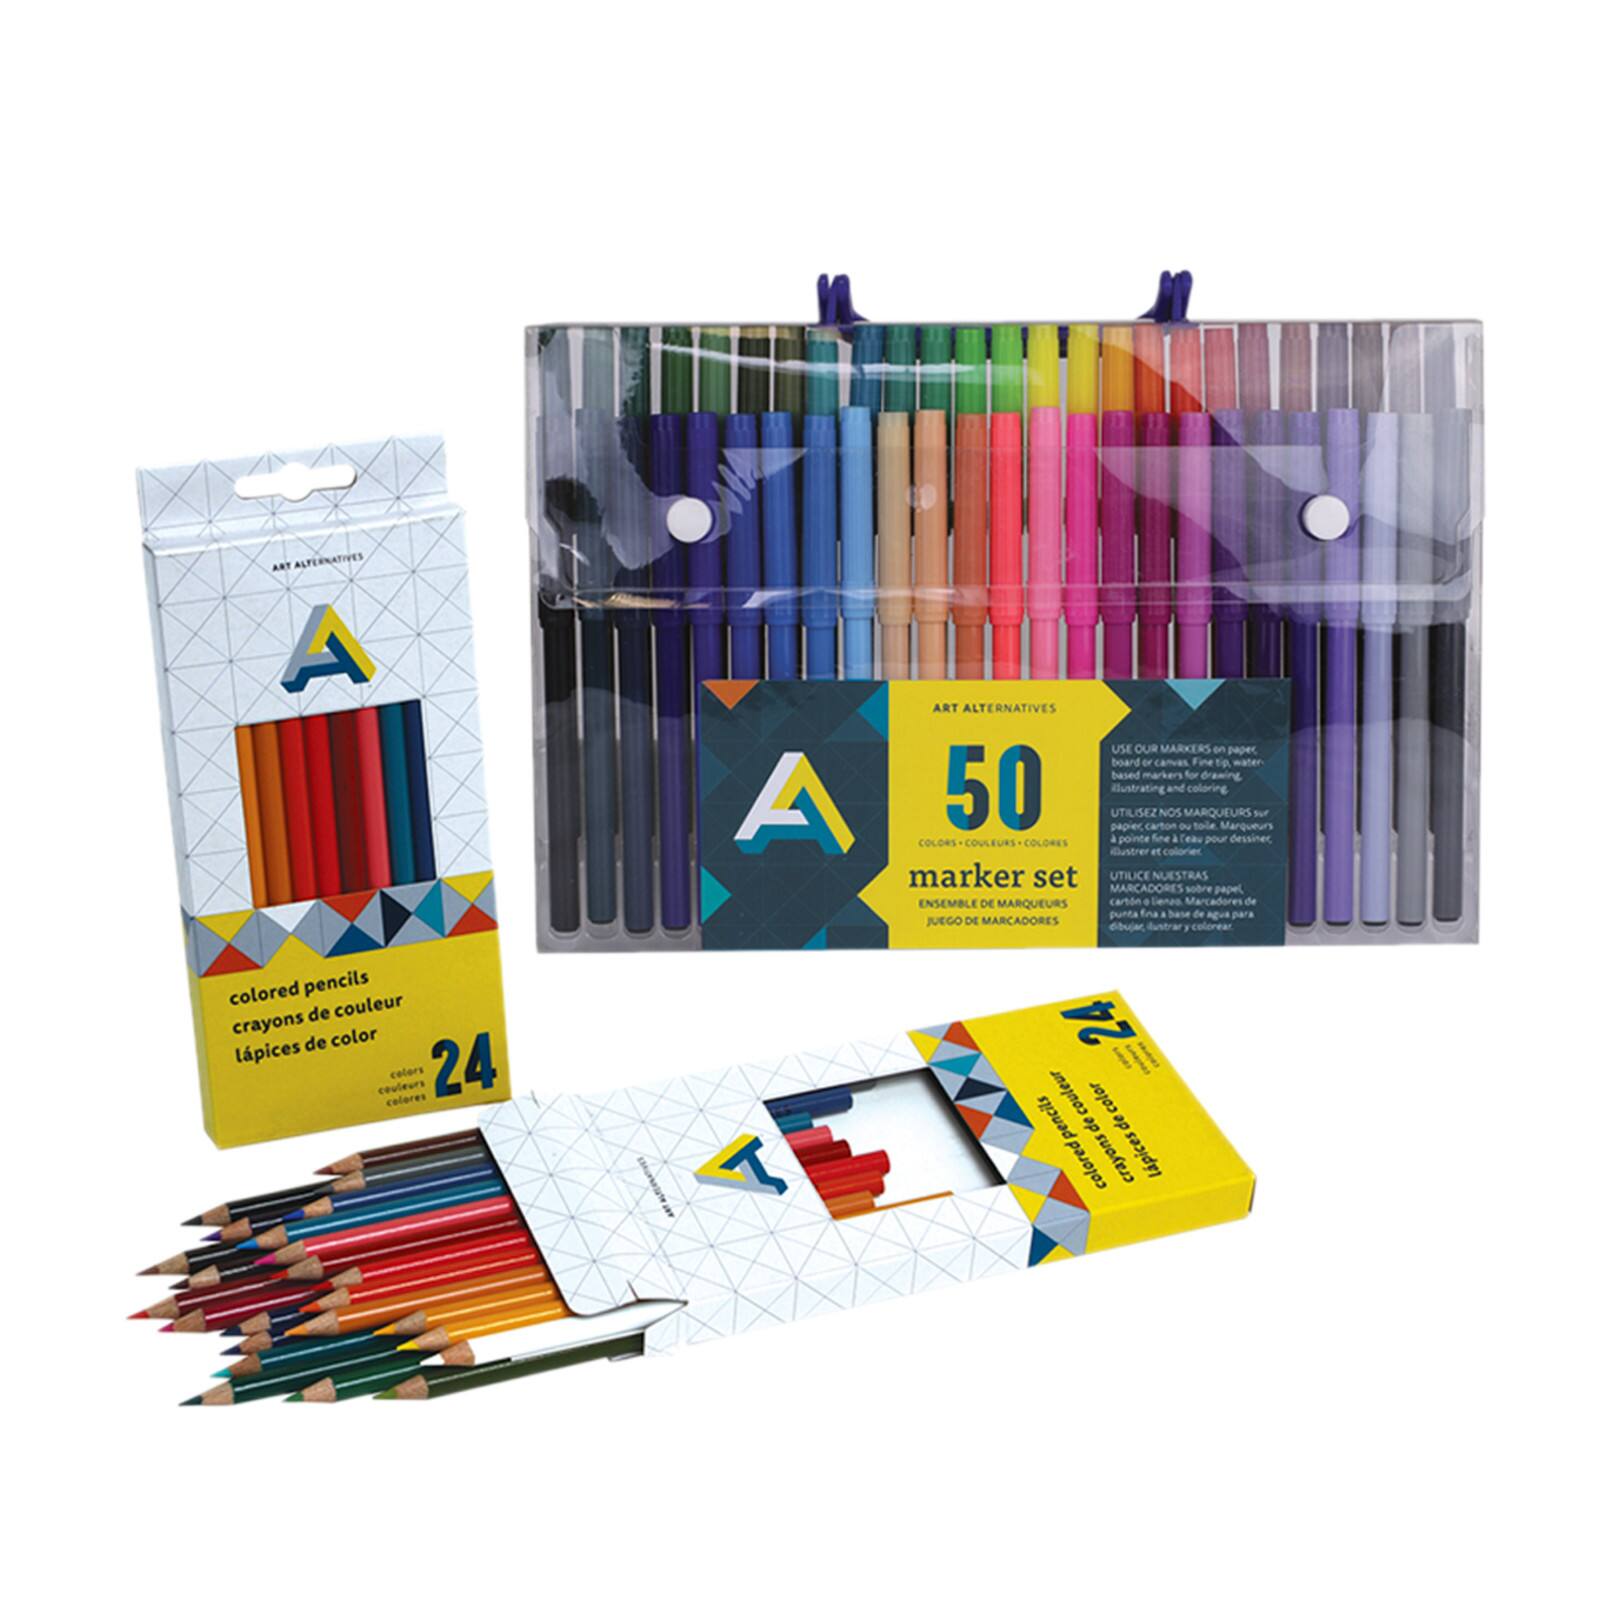 Creativity at Home Beginner Painting & Drawing Kit